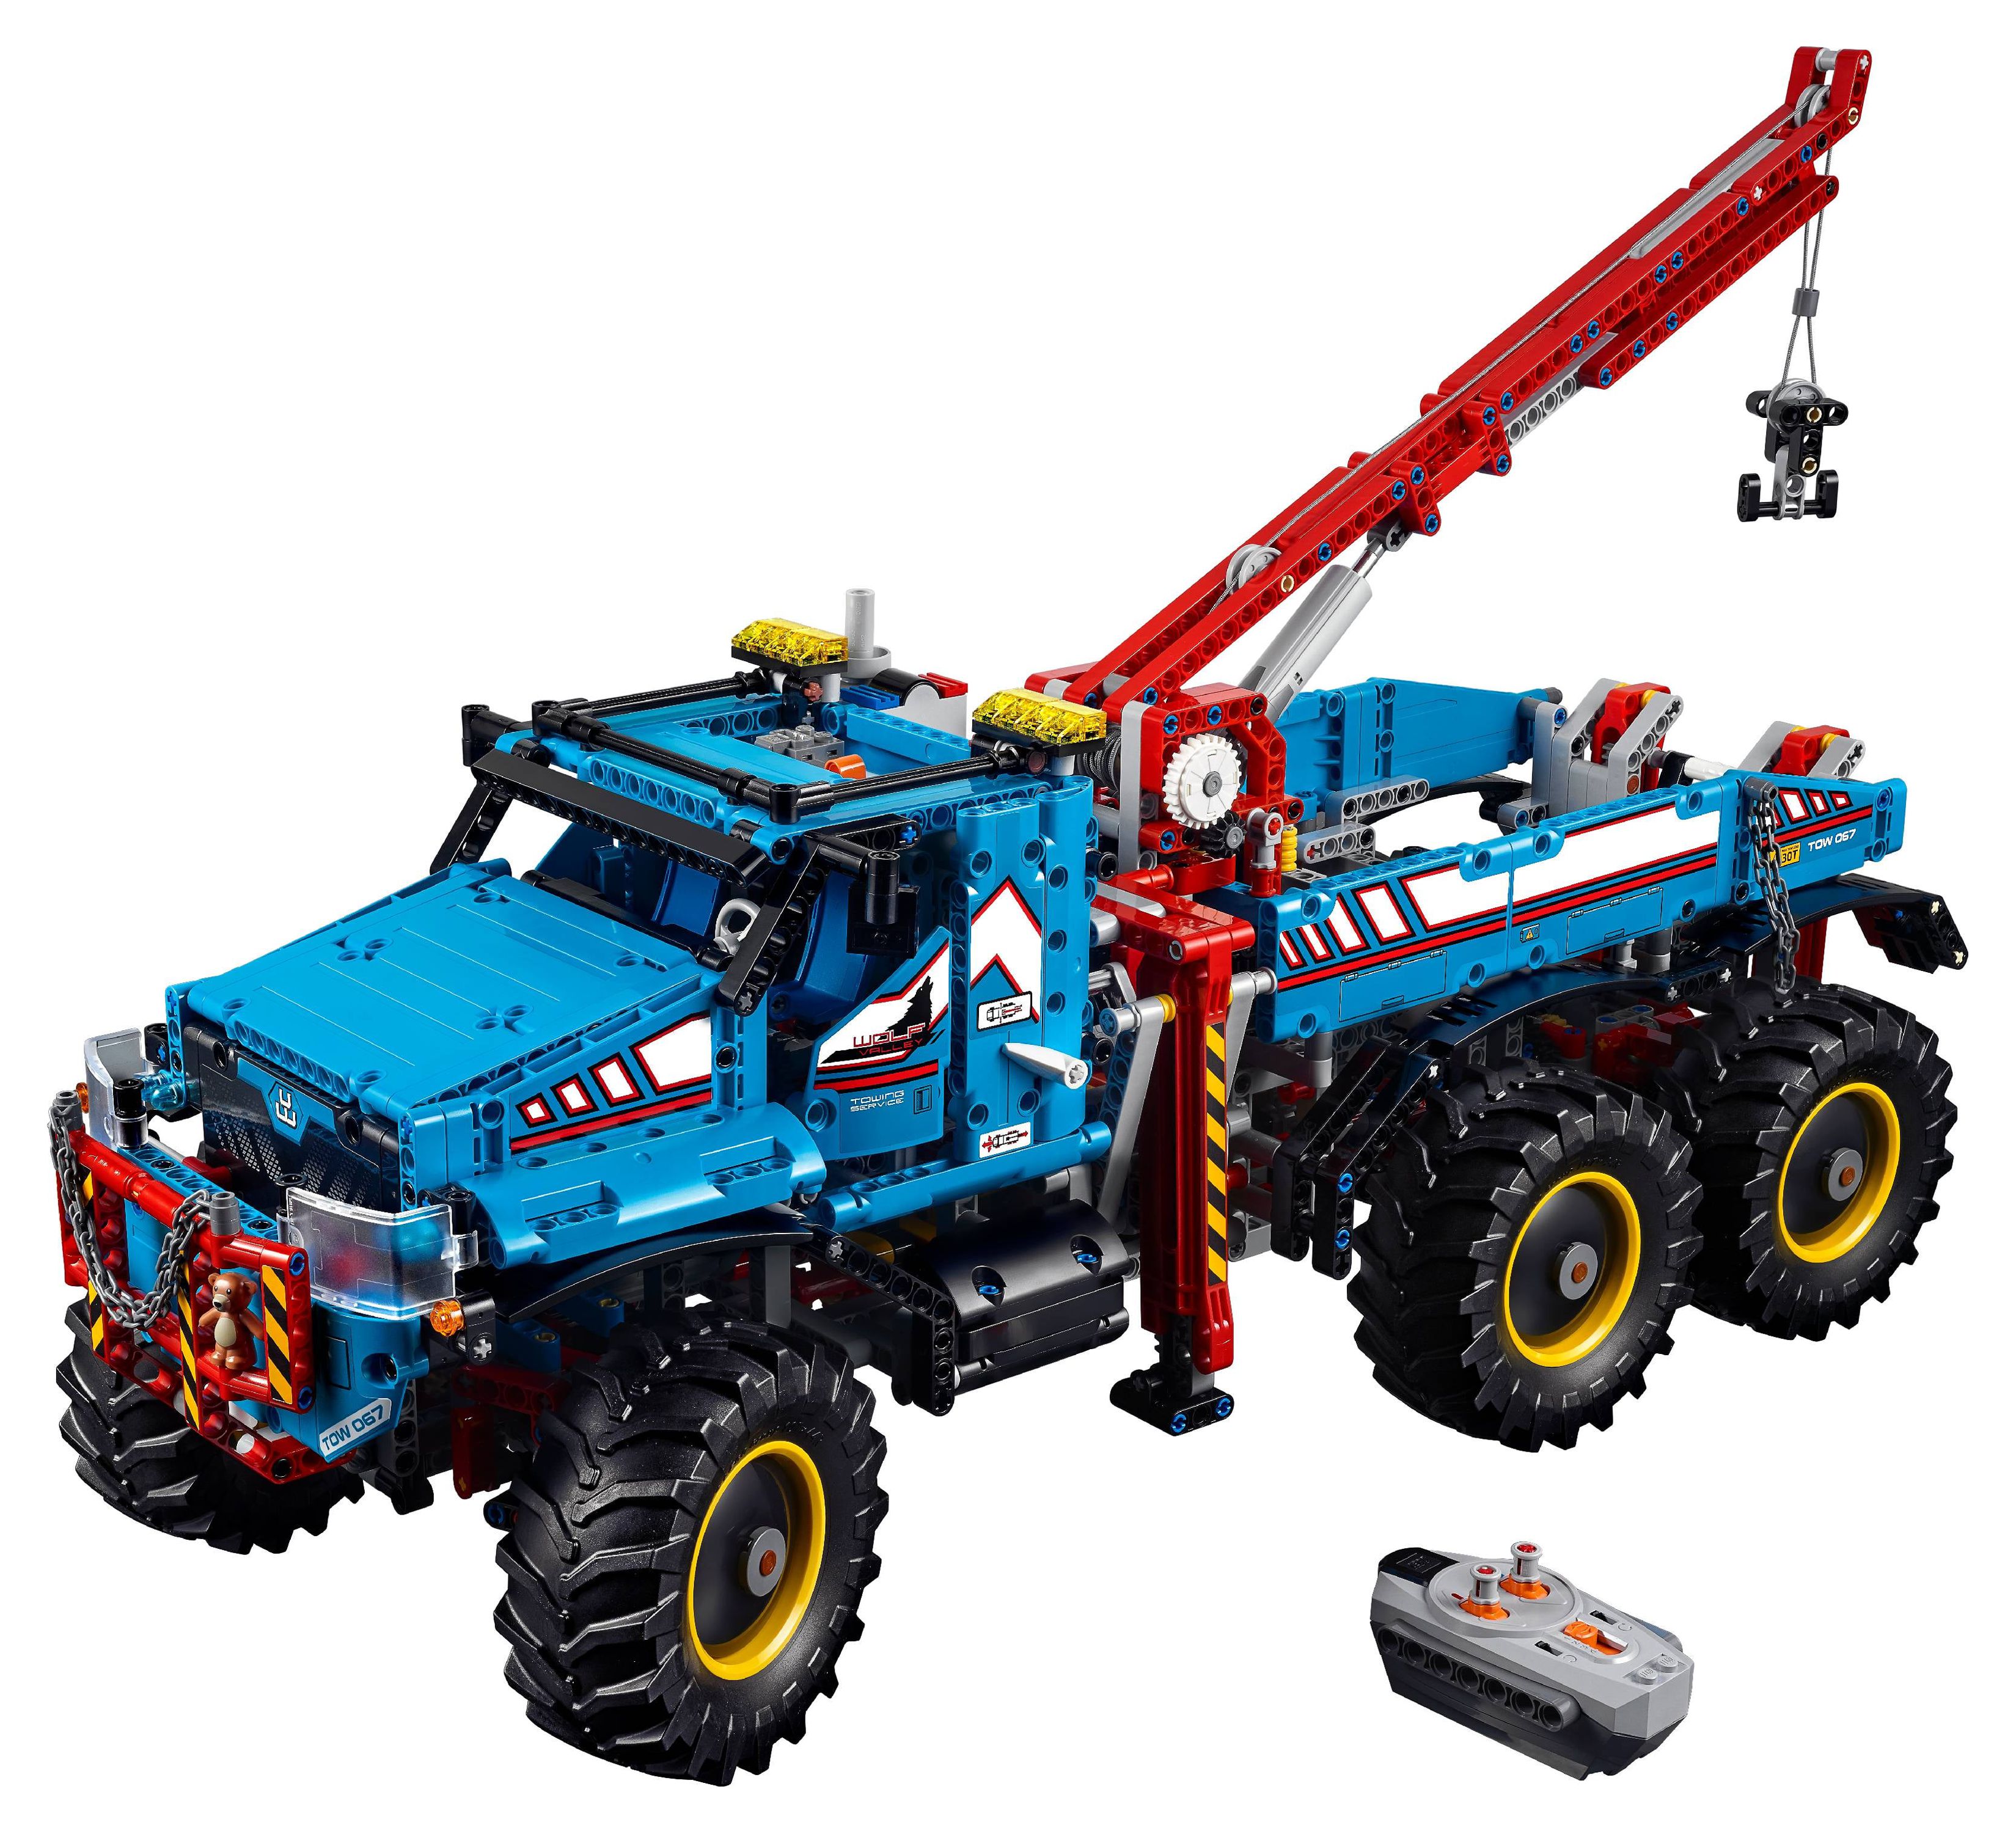 LEGO Technic 6x6 All Terrain Tow Truck 42070 - image 2 of 4